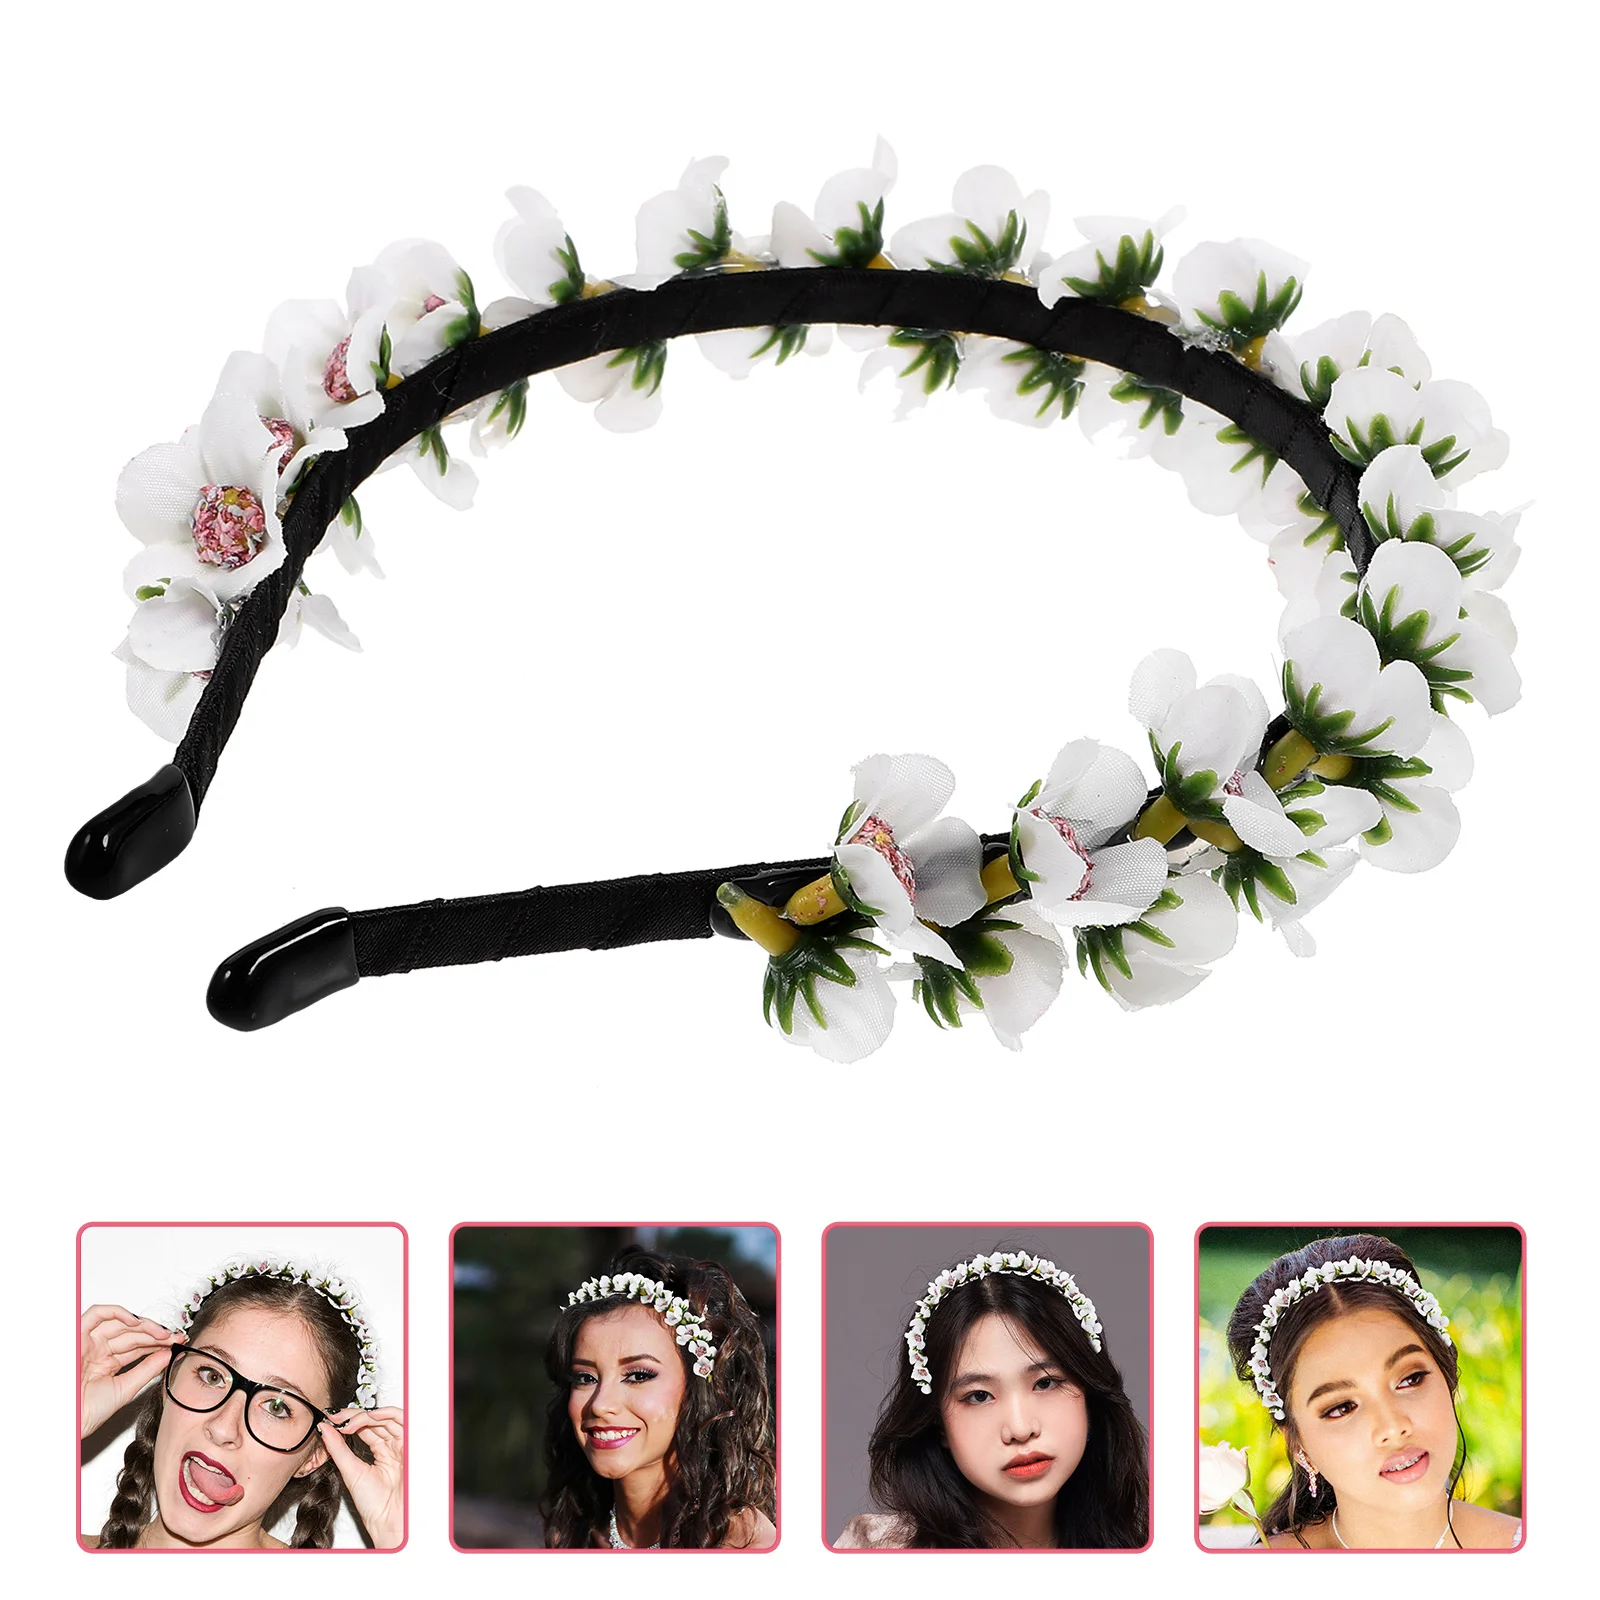 Wreath Headband Floral Hair Accessories Flower Crown Kit Headpiece Prom Headbands for Women Wedding Bride